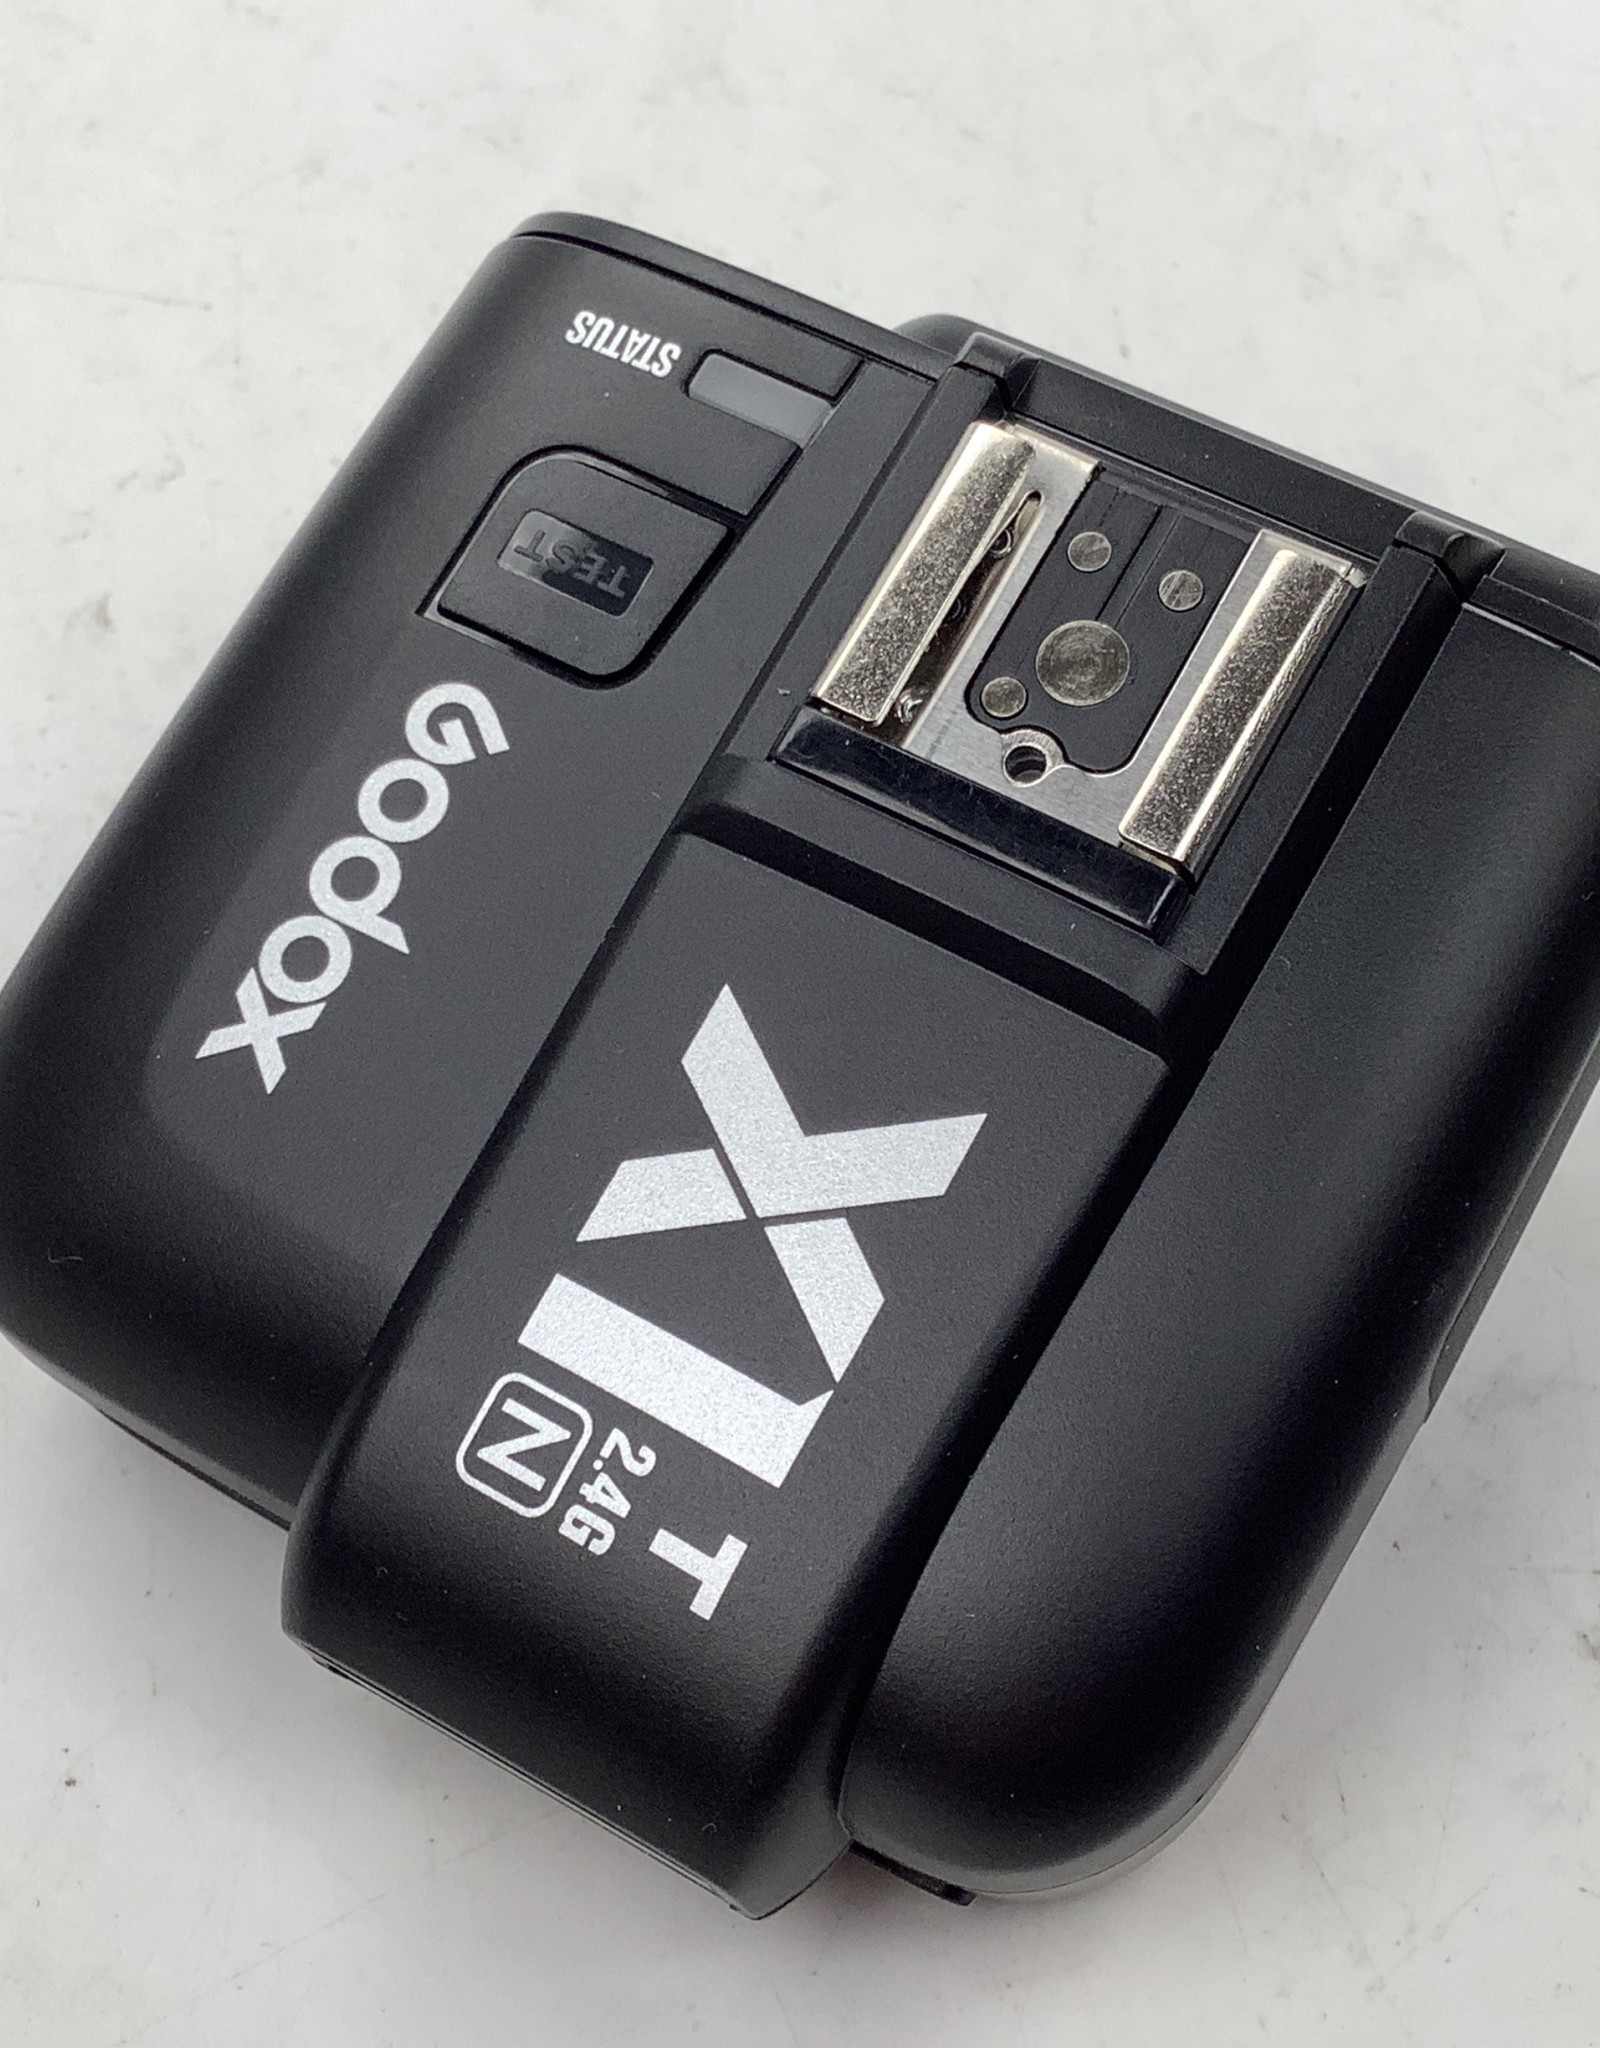 GODOX Godox X1T-N Flash Trigger for Nikon in Box Used  LN